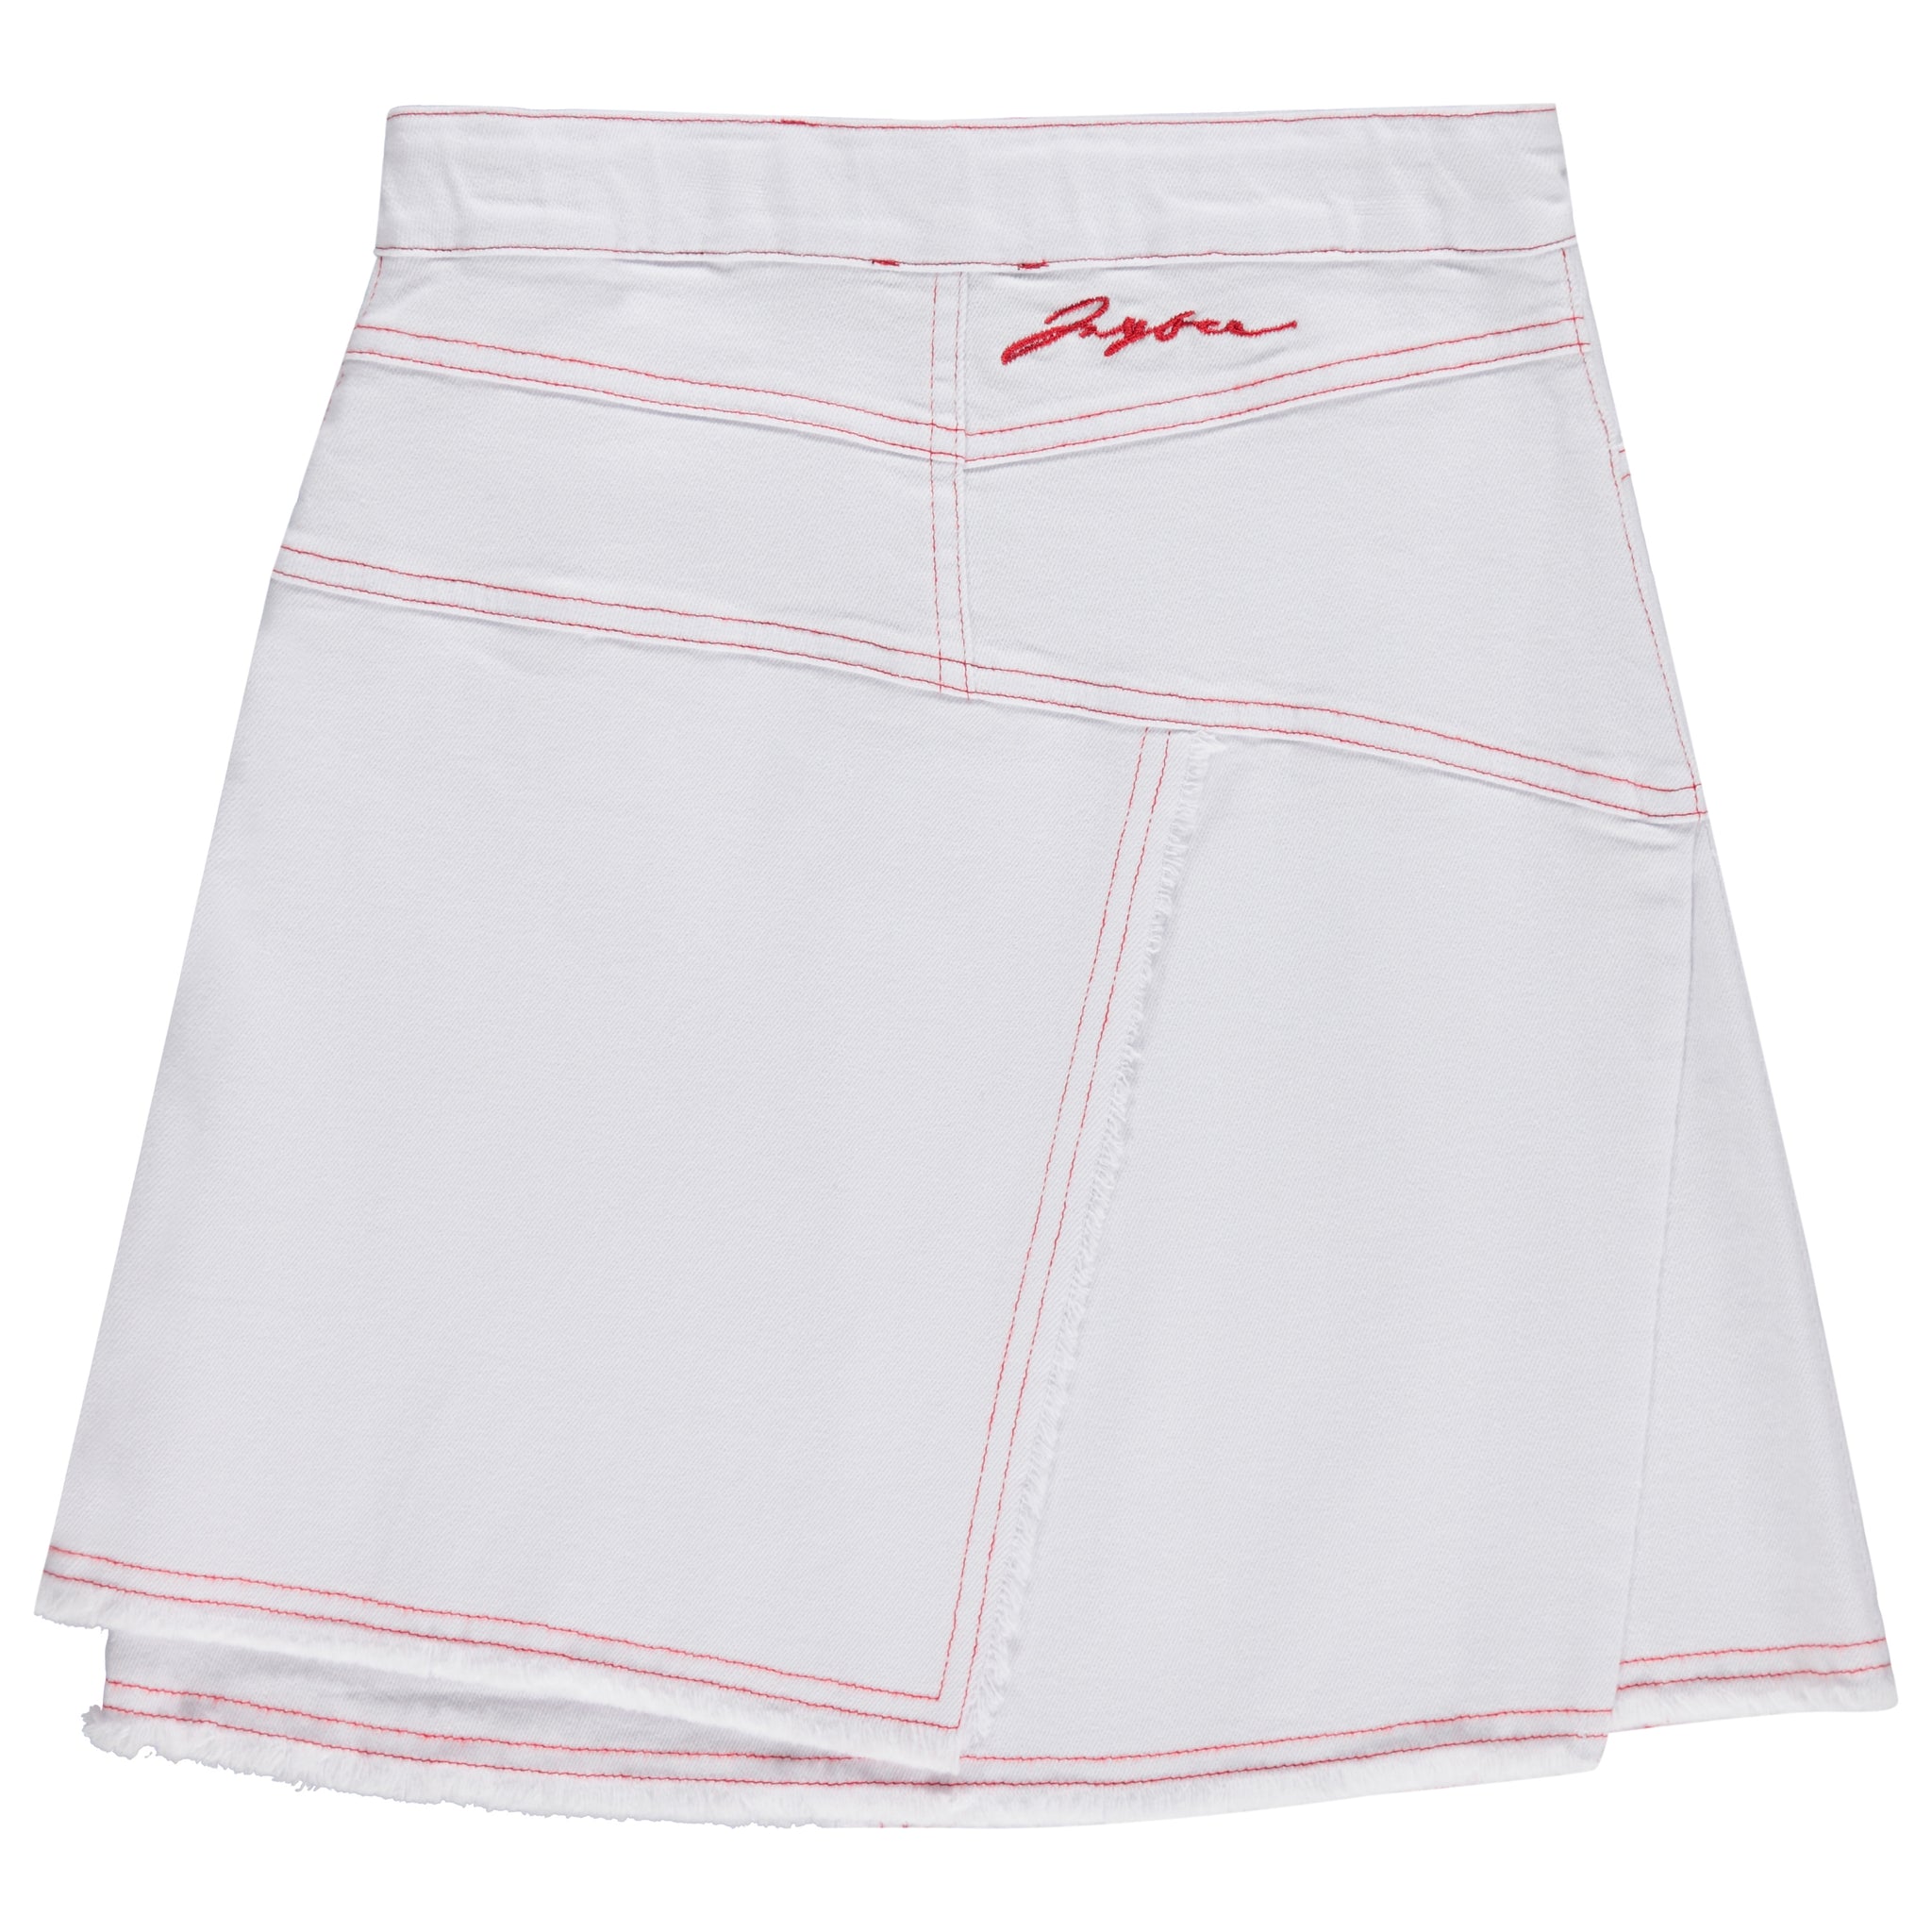 Stitched Denim Skirt